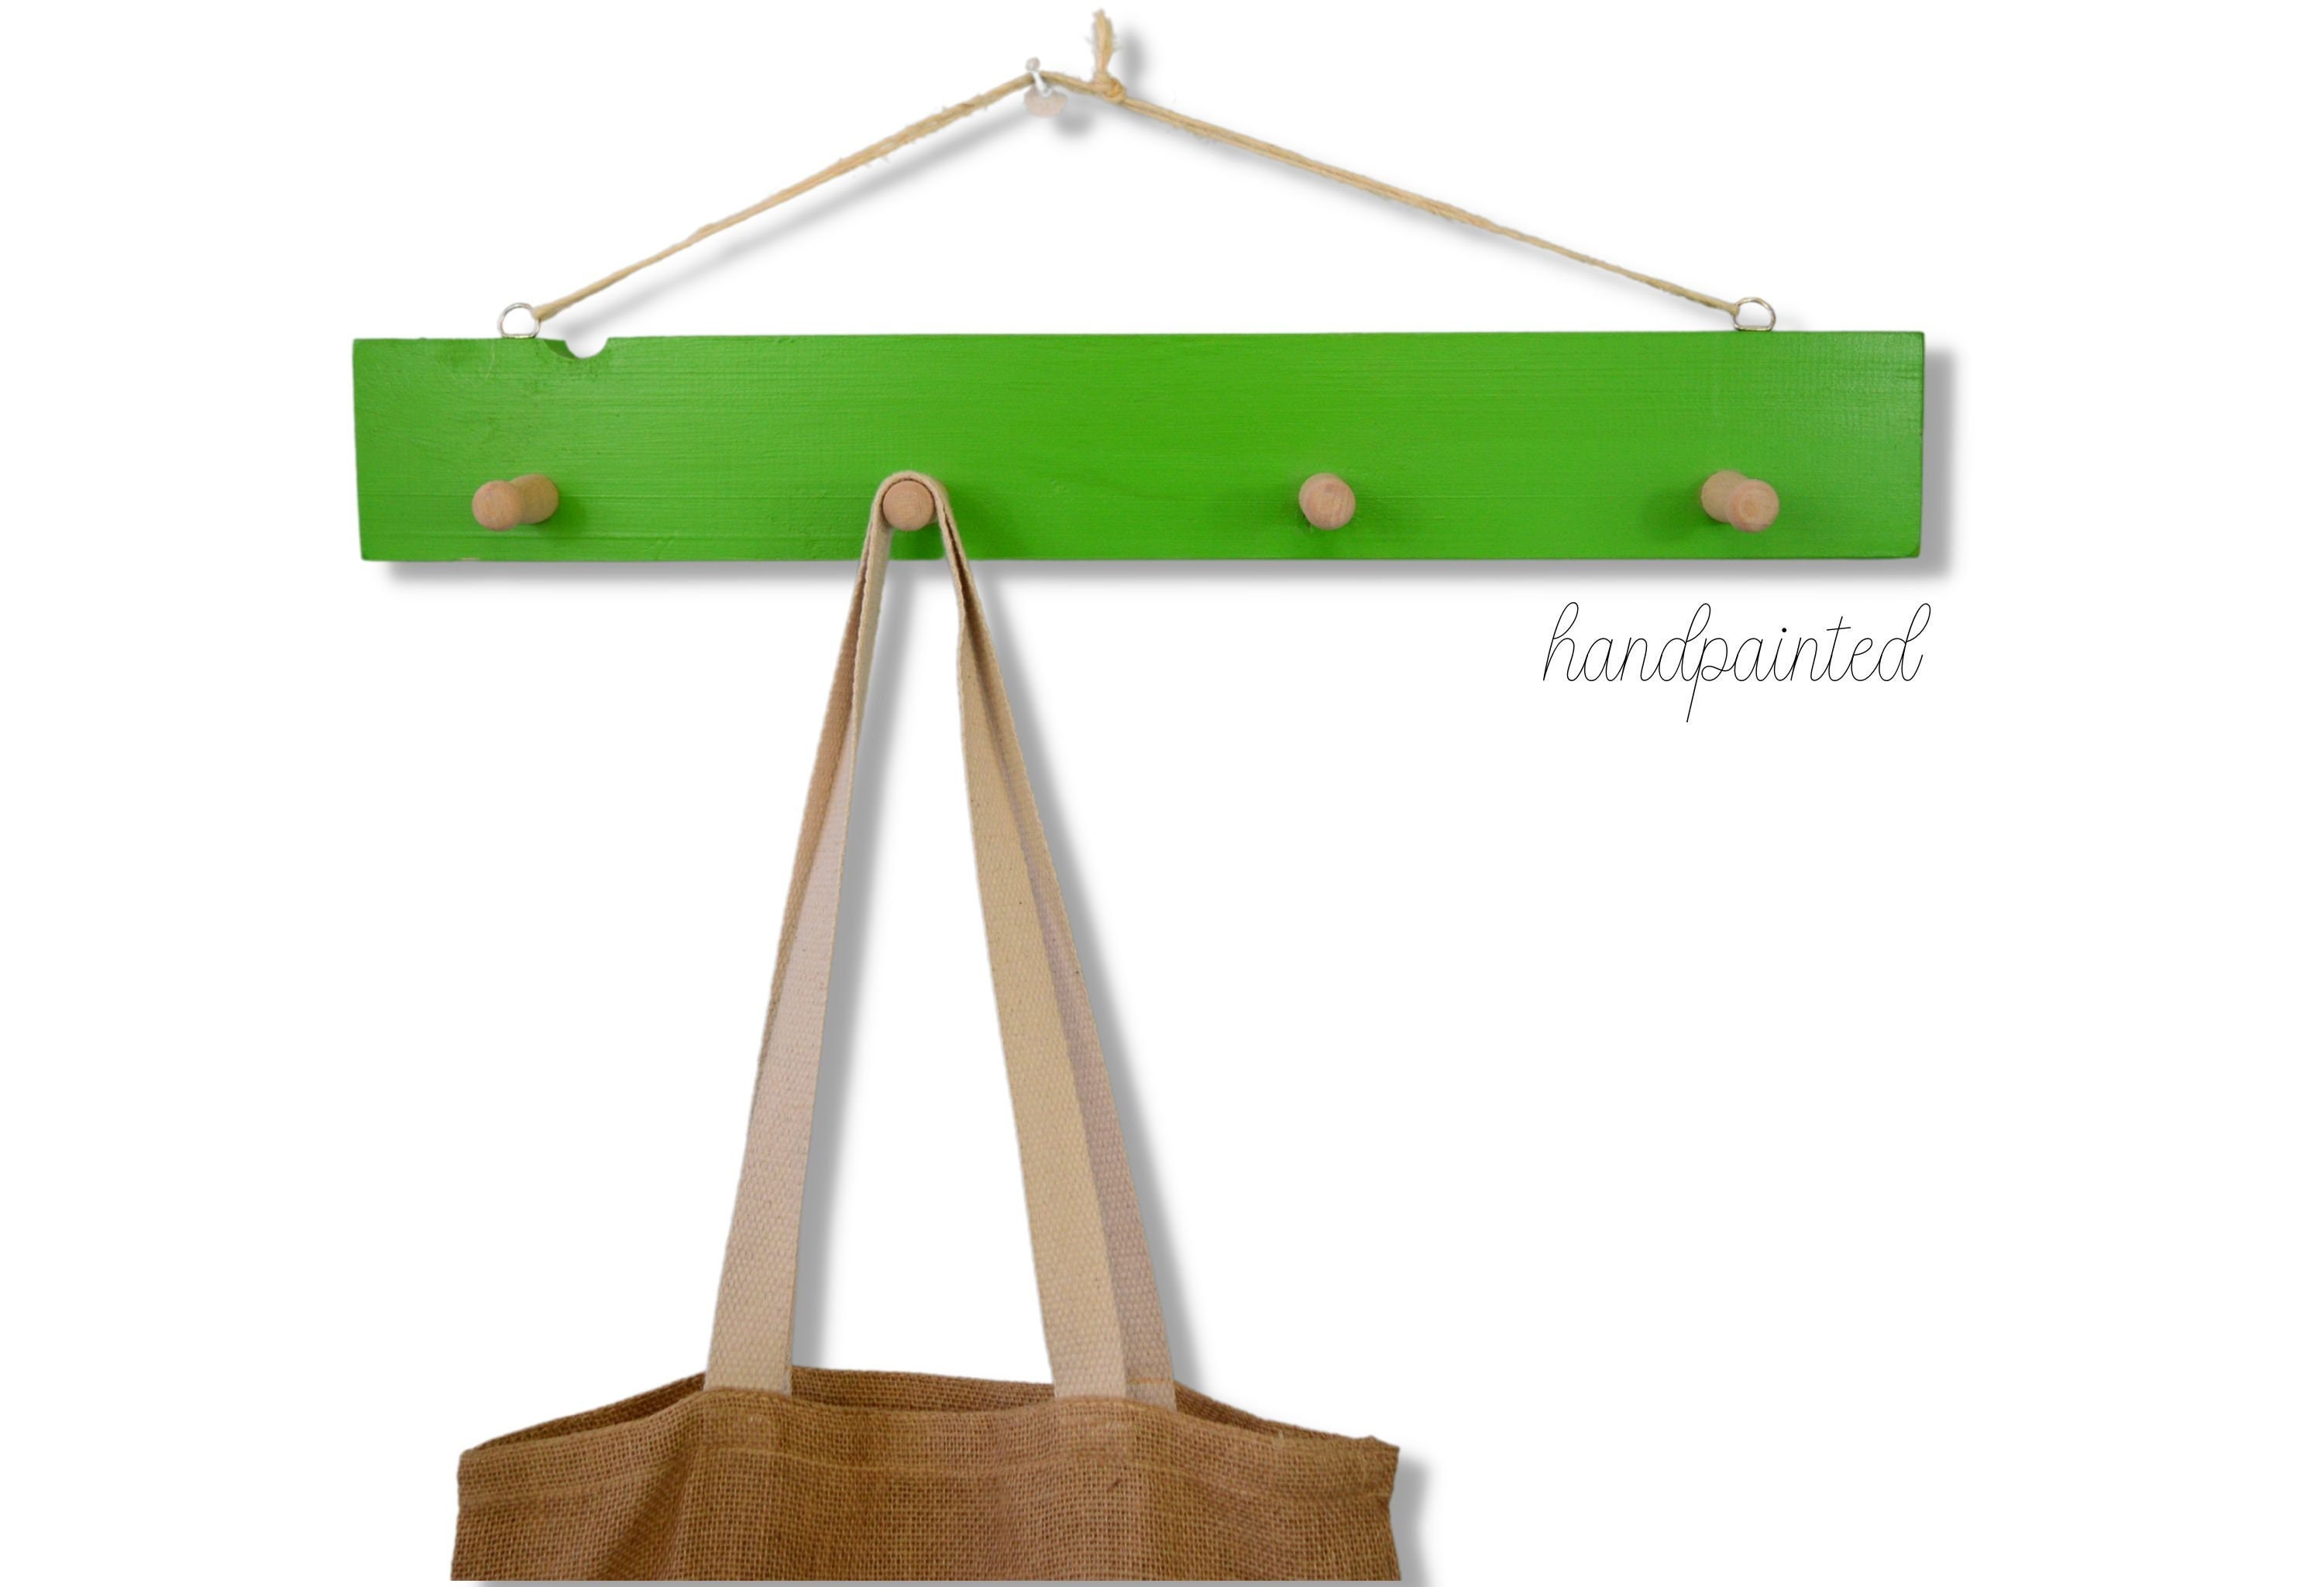 Shelf With Hooks Towel Rack Kitchen Decor Wooden Peg Rail Wooden